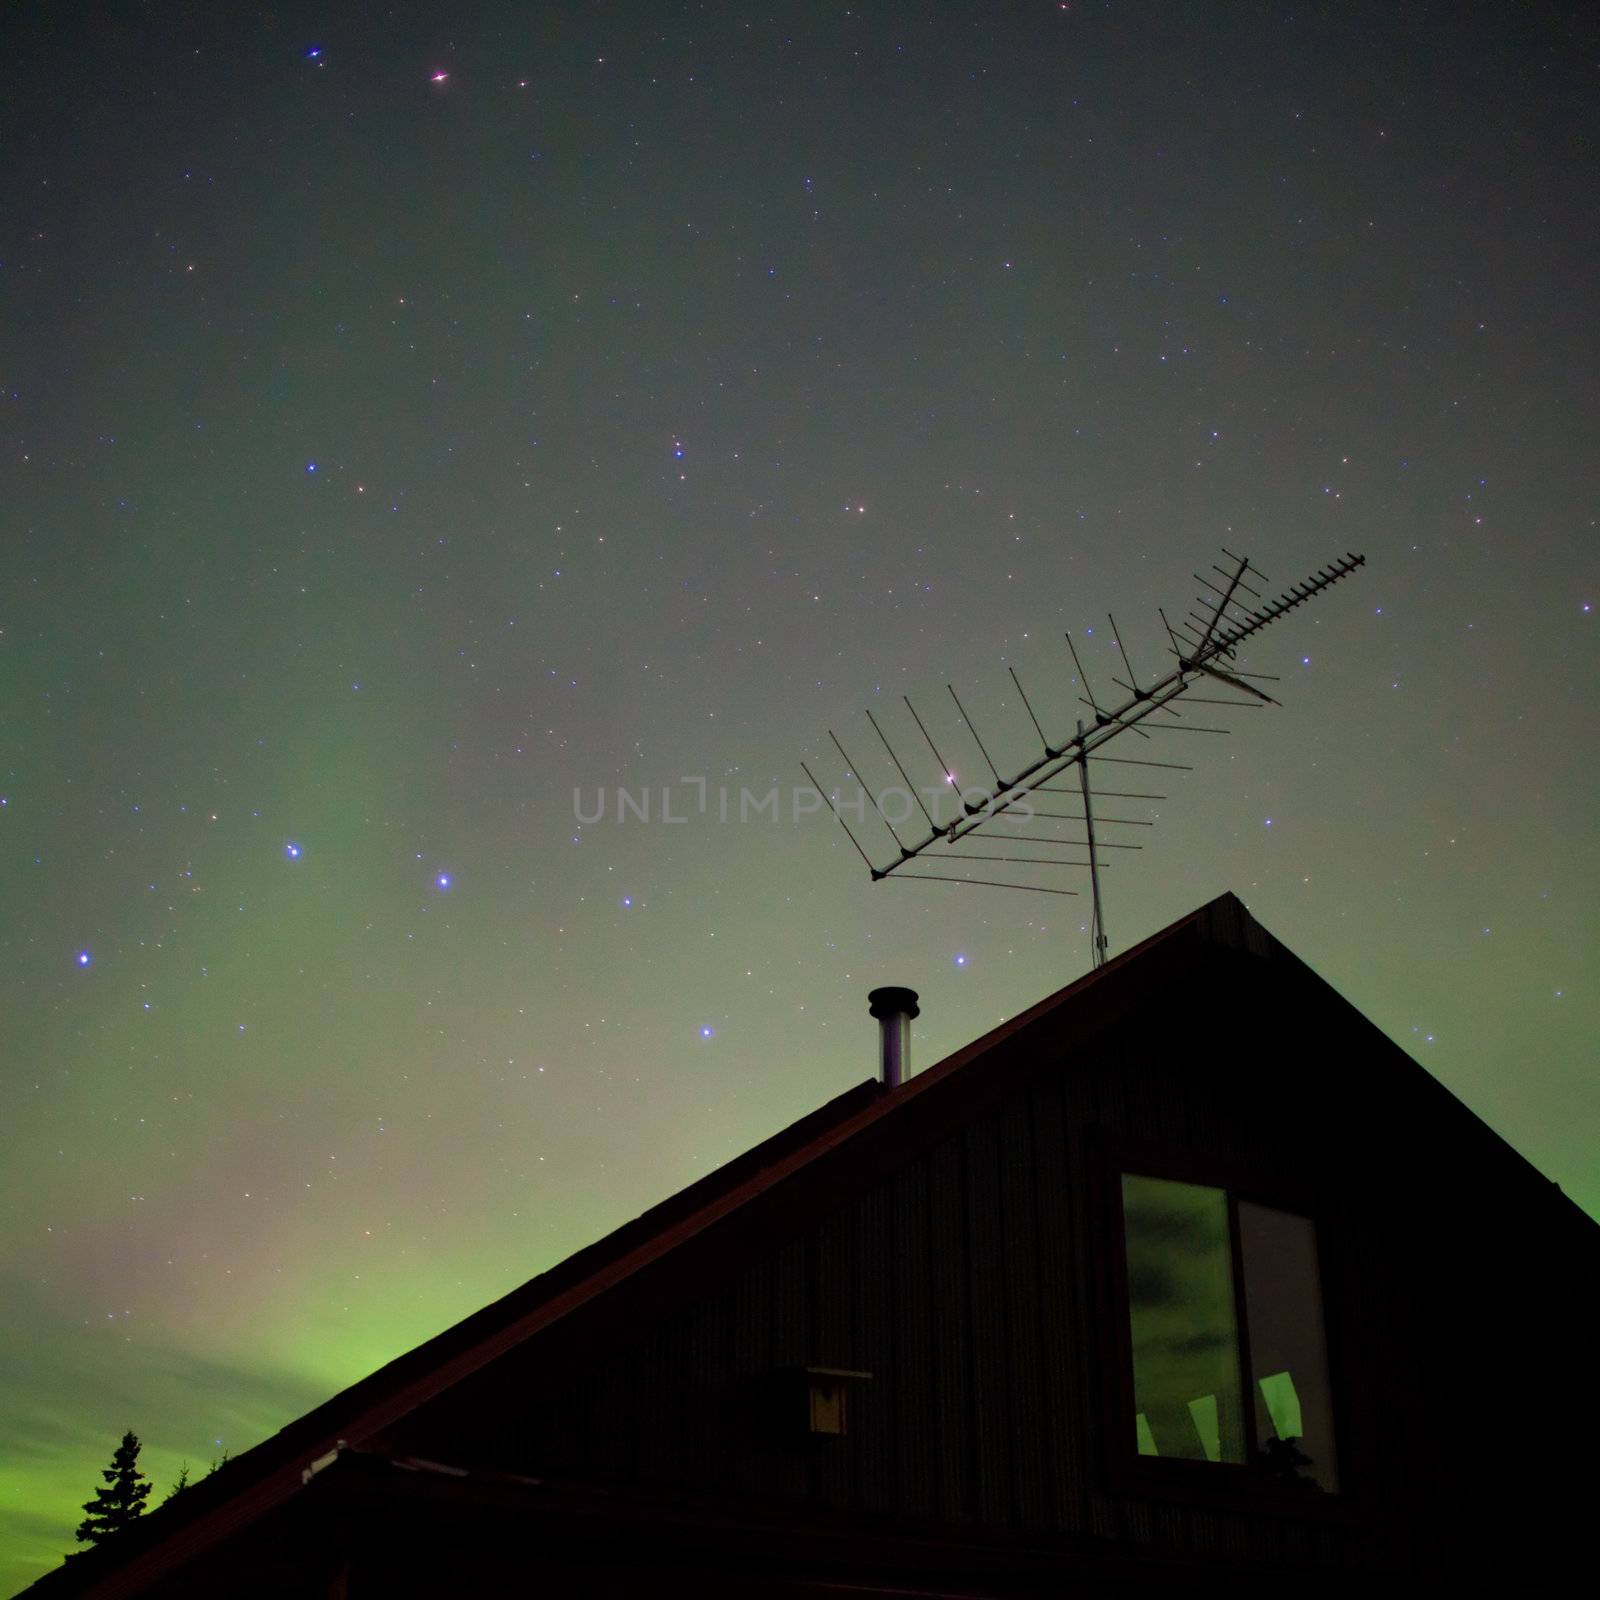 Northern lights (Aurora borealis) substorm by PiLens